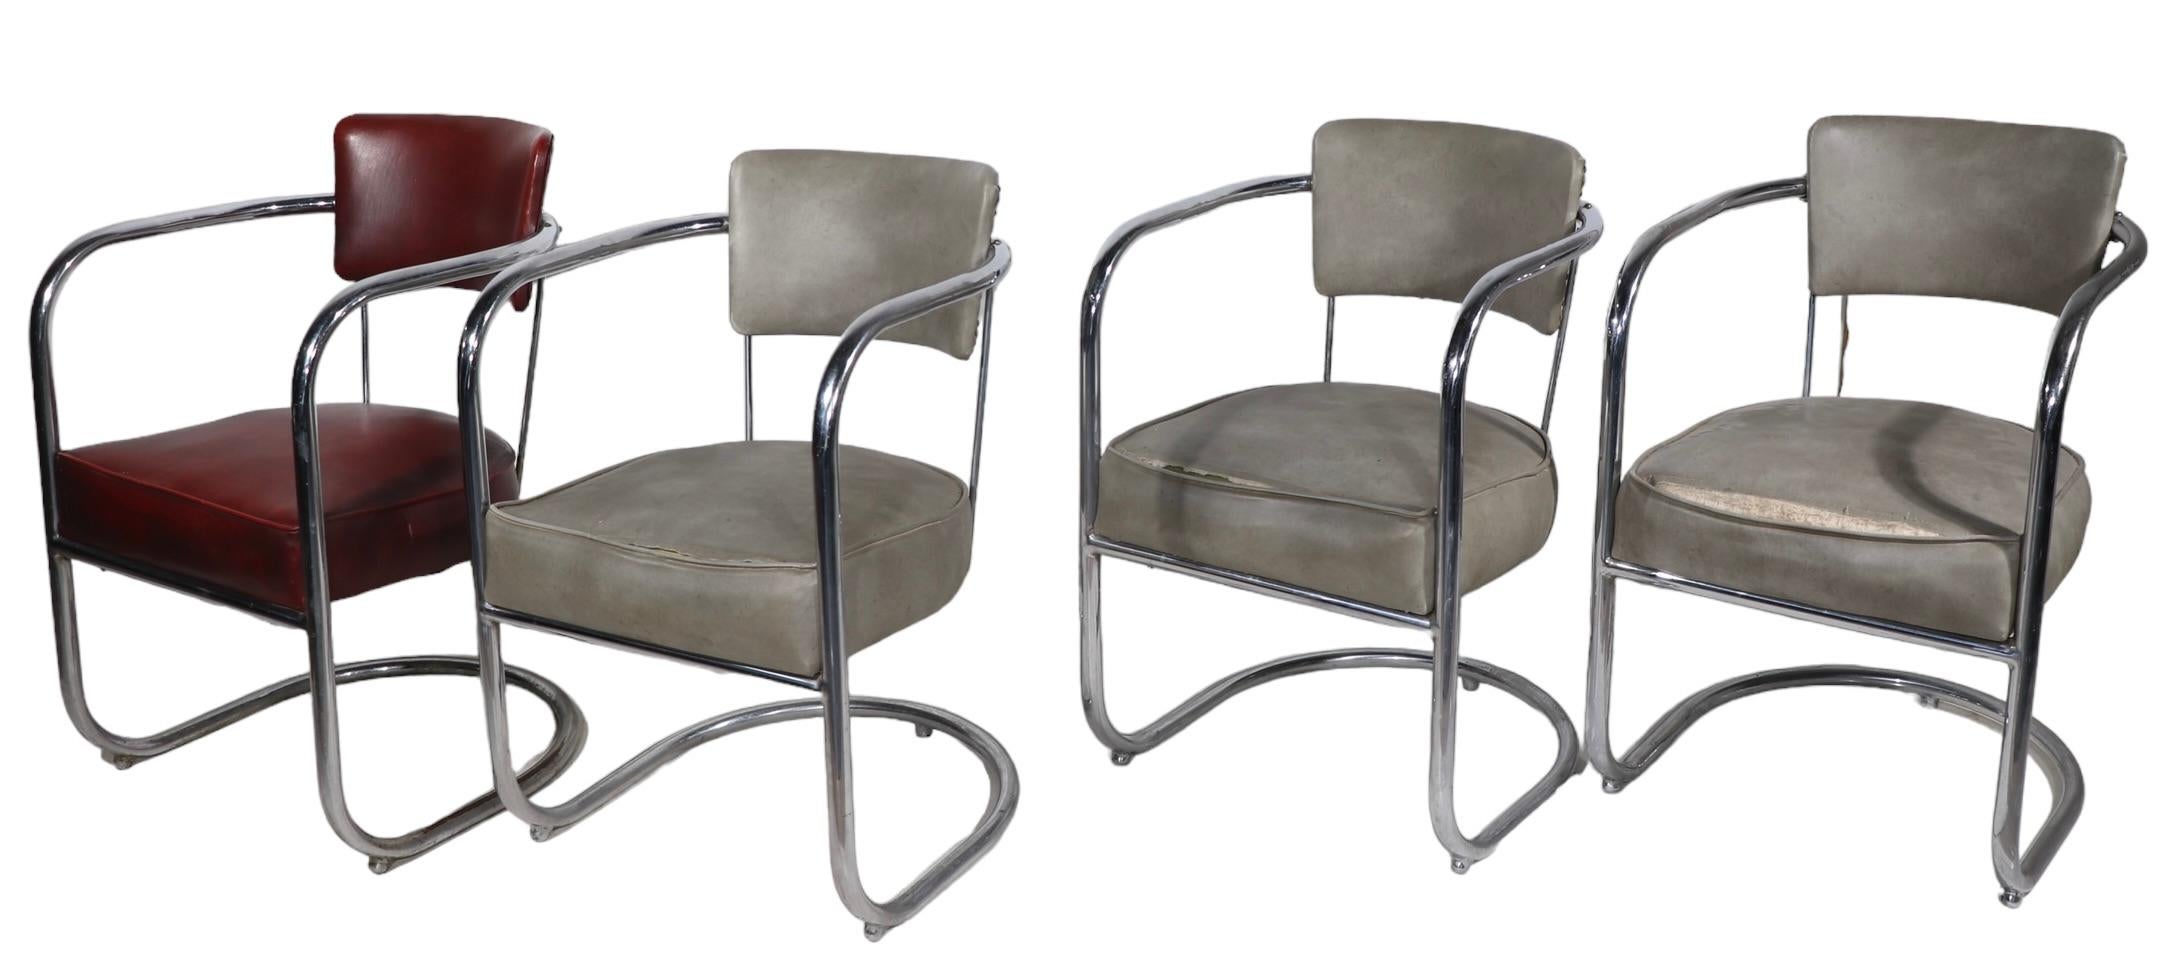 4 Chrome Art Deco Arm Chairs by Lloyd Furniture att. to Kem Weber c.1930's For Sale 9